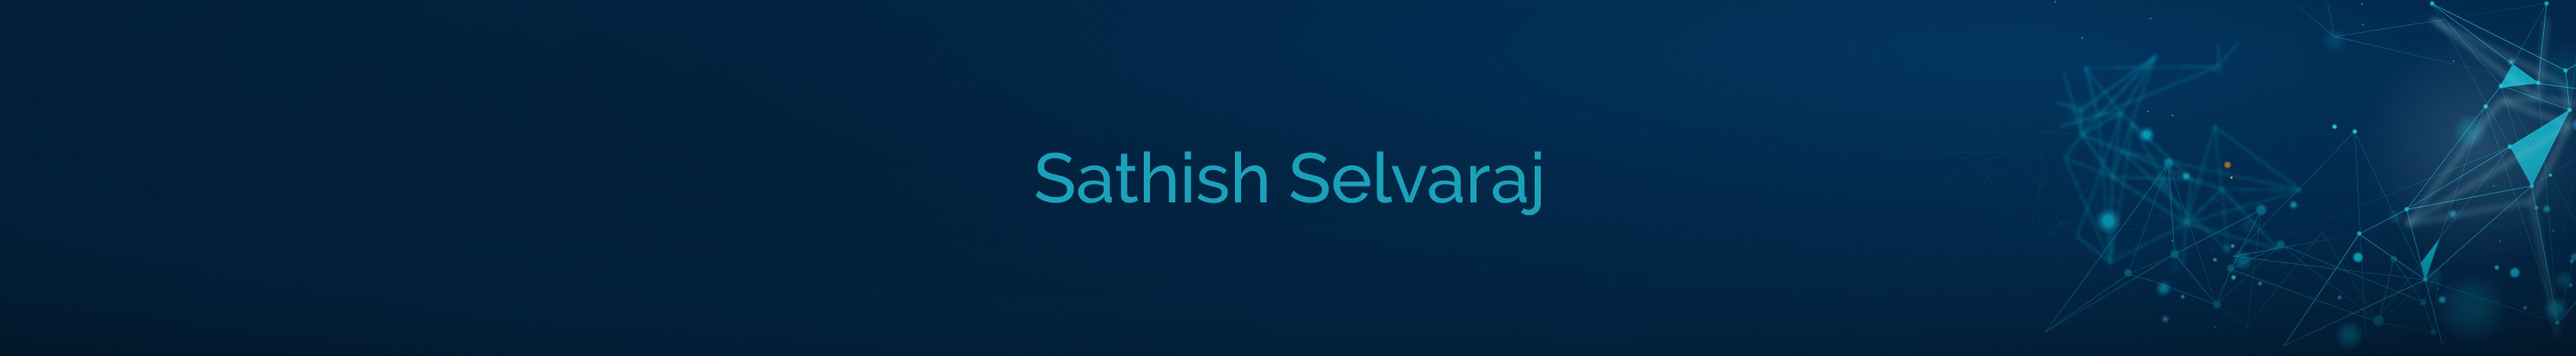 Sathish Selvaraj's profile banner